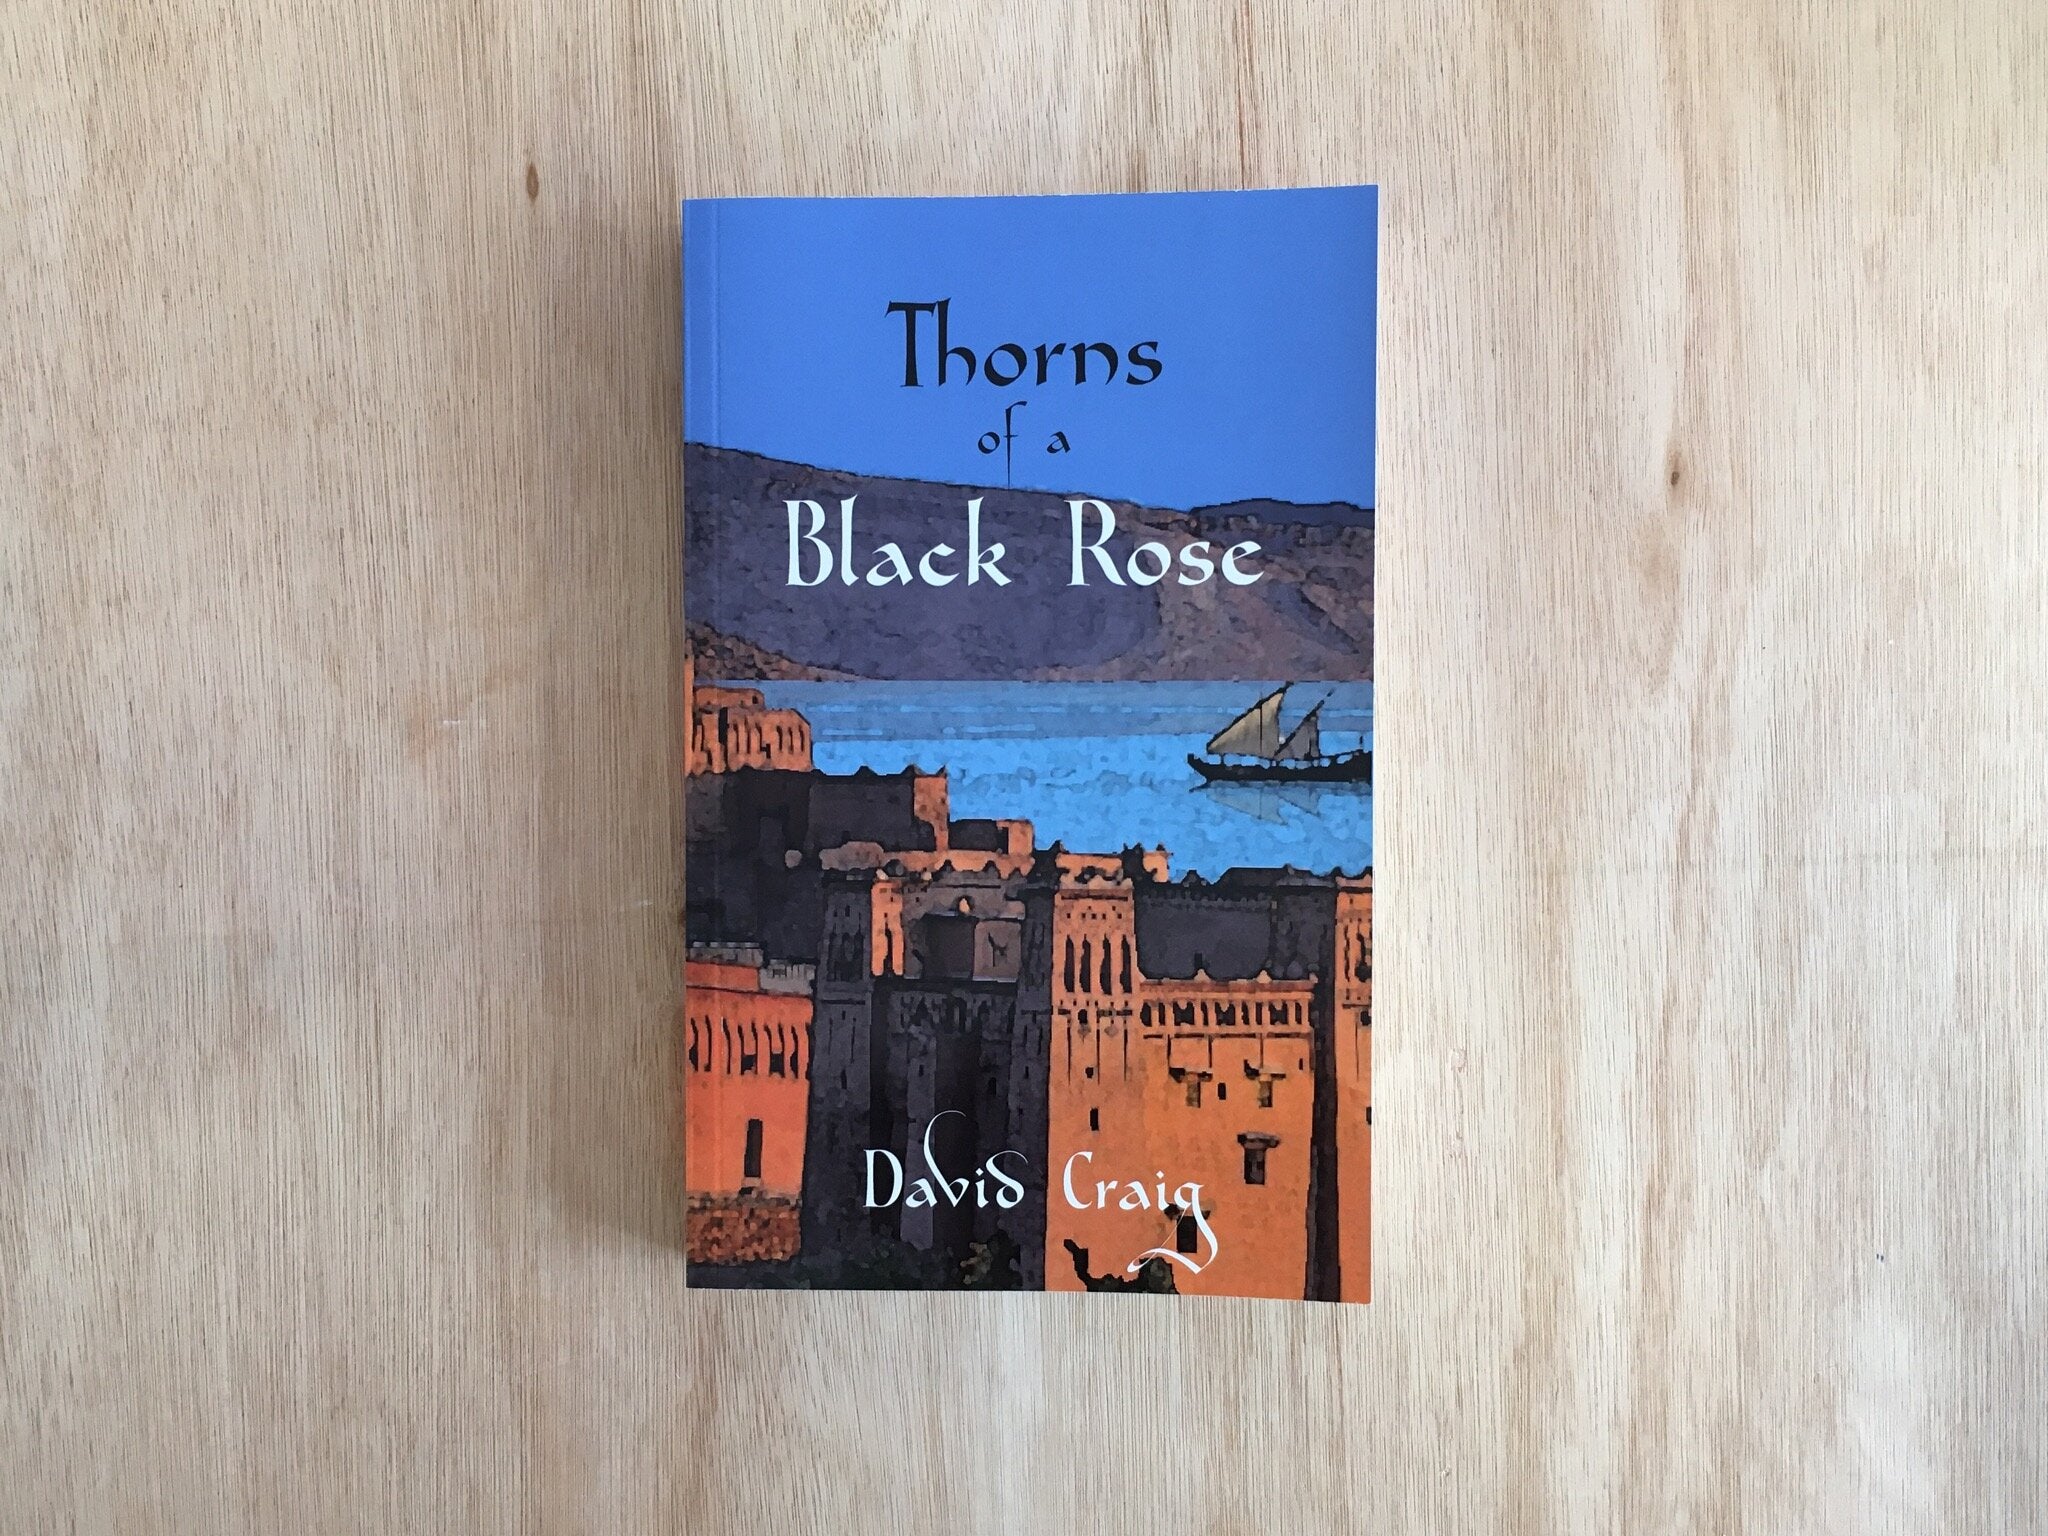 THORNS OF A BLACK ROSE by David Craig